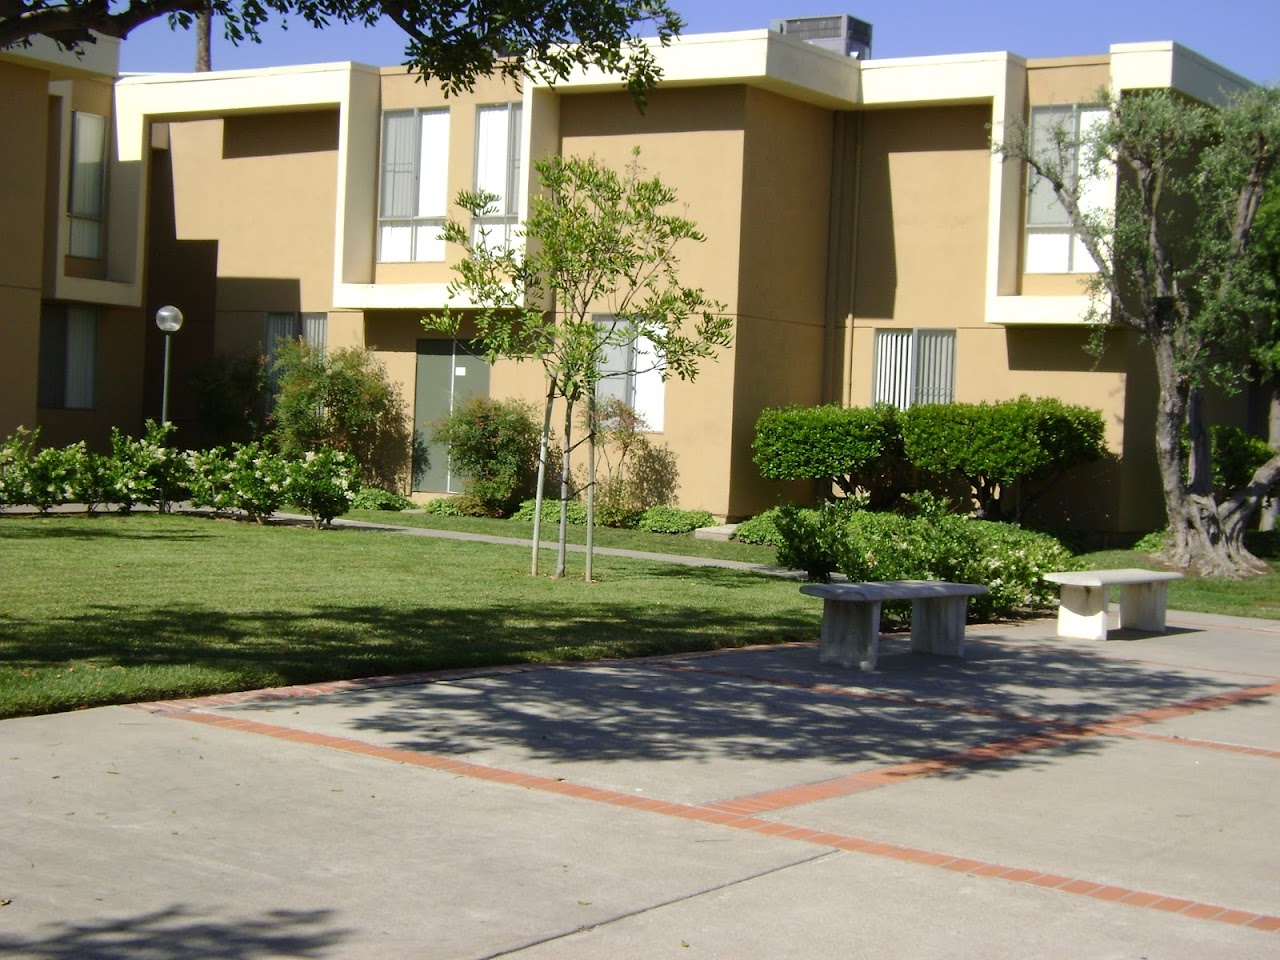 Photo of LEXINGTON GREEN APTS. Affordable housing located at 1415 E LEXINGTON AVE EL CAJON, CA 92019